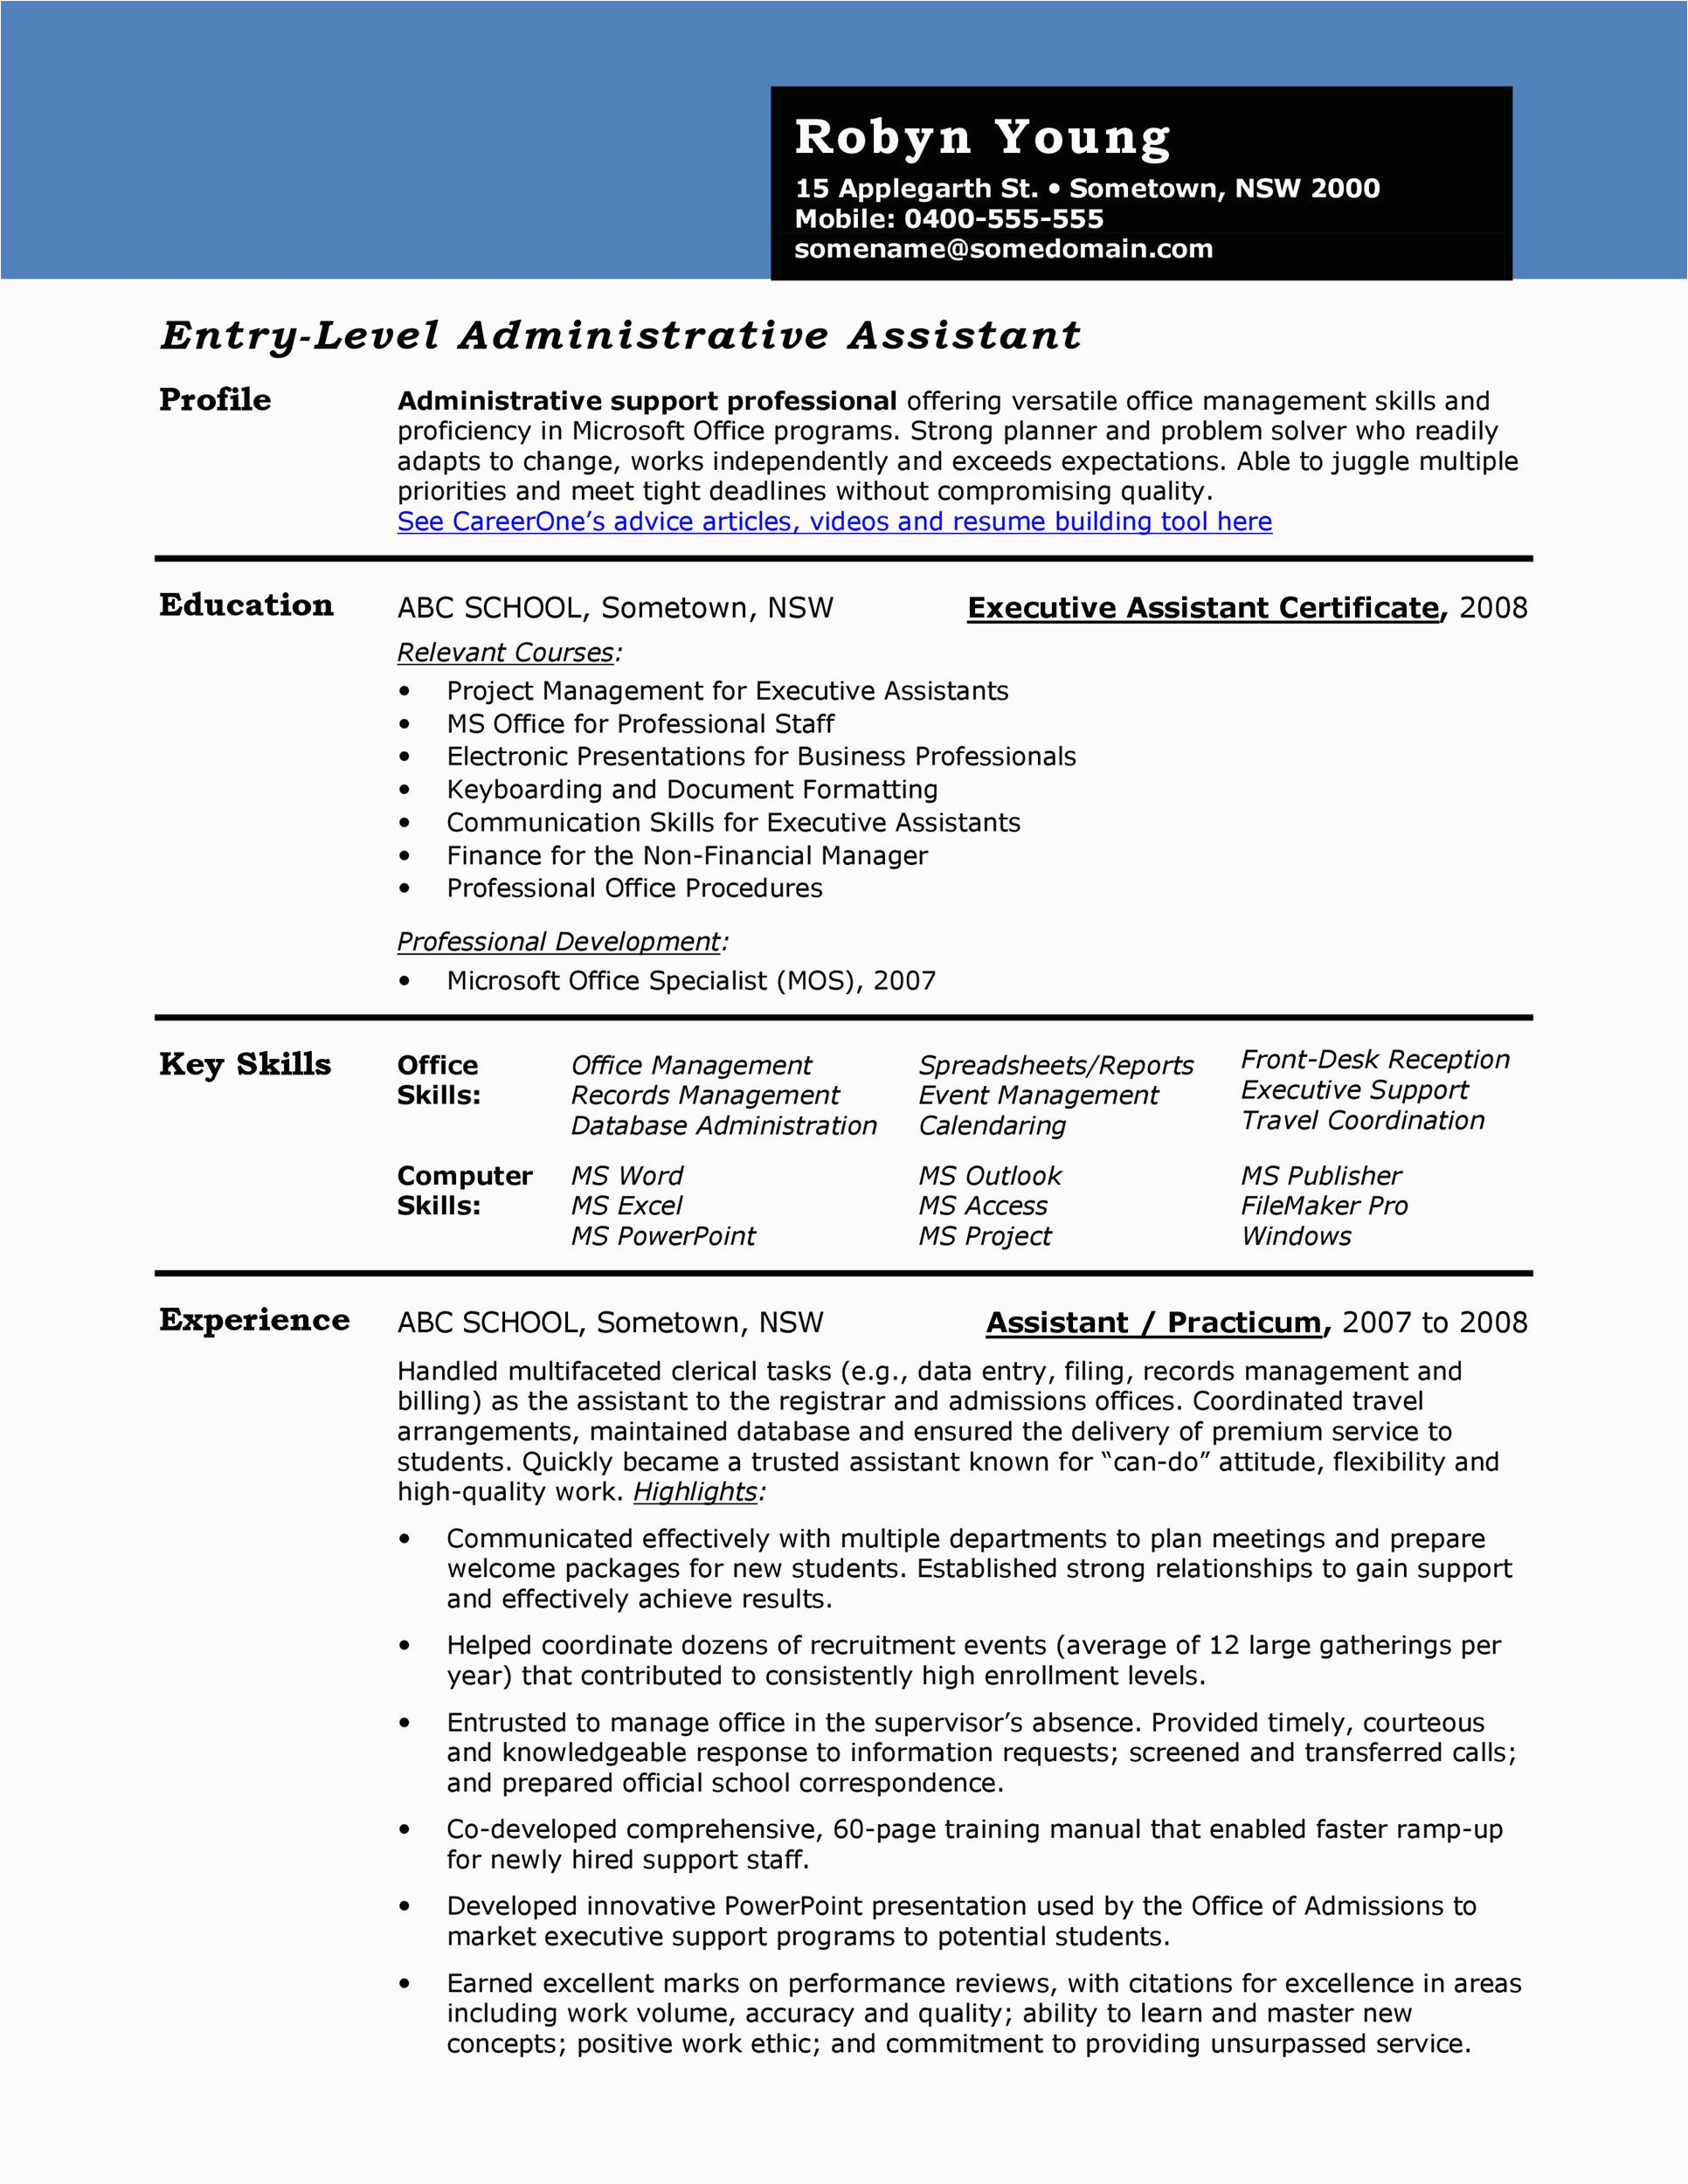 Sample Resume format for Administrative assistant 20 Free Administrative assistant Resume Samples Template Lab